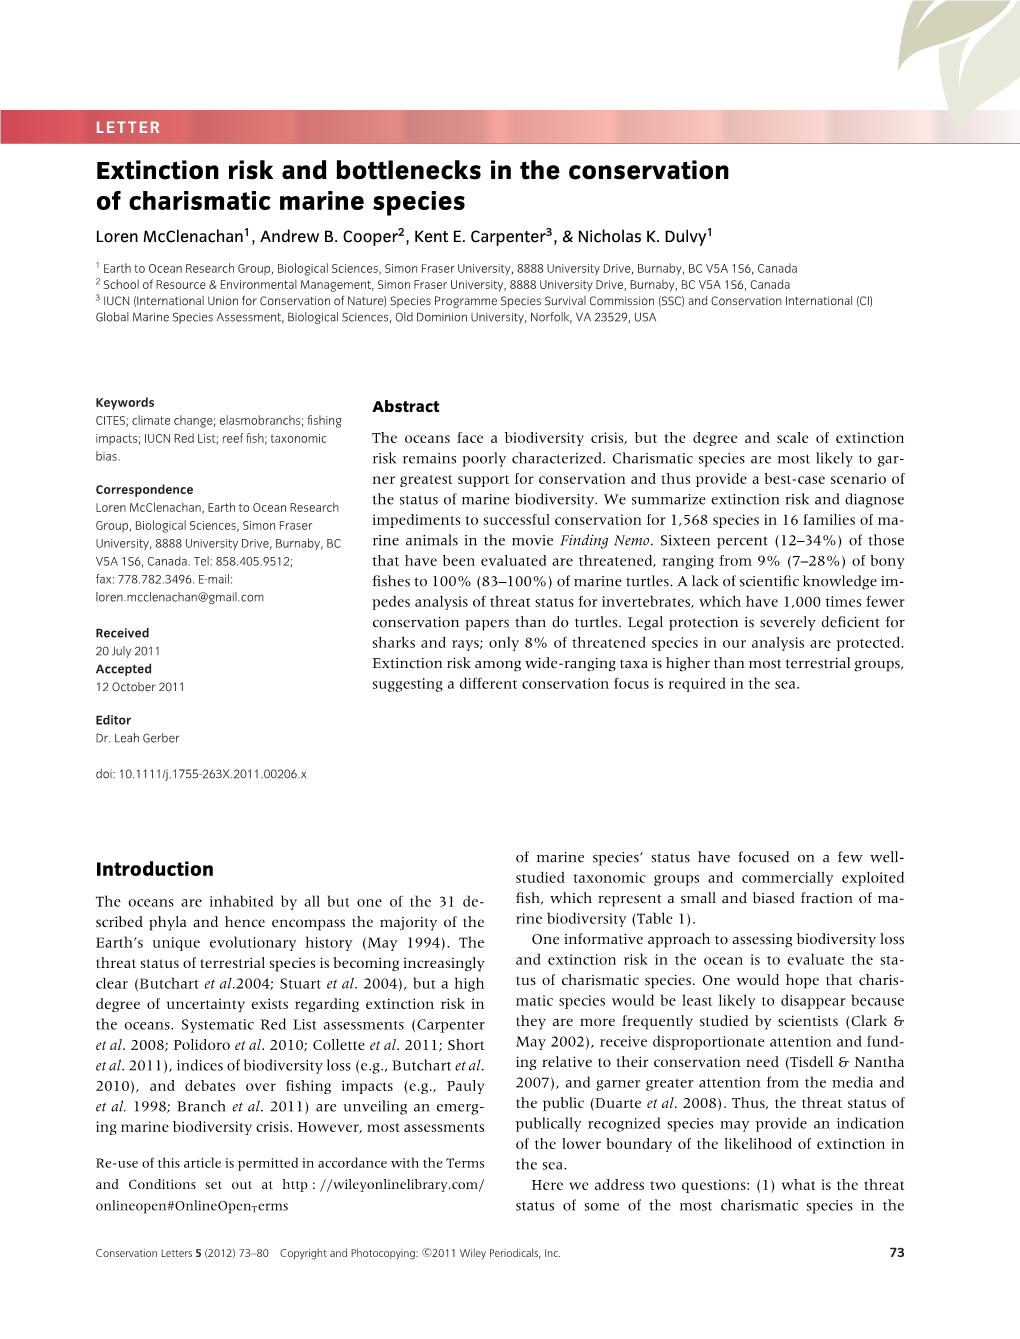 Extinction Risk and Bottlenecks in the Conservation of Charismatic Marine Species Loren Mcclenachan1,Andrewb.Cooper2, Kent E